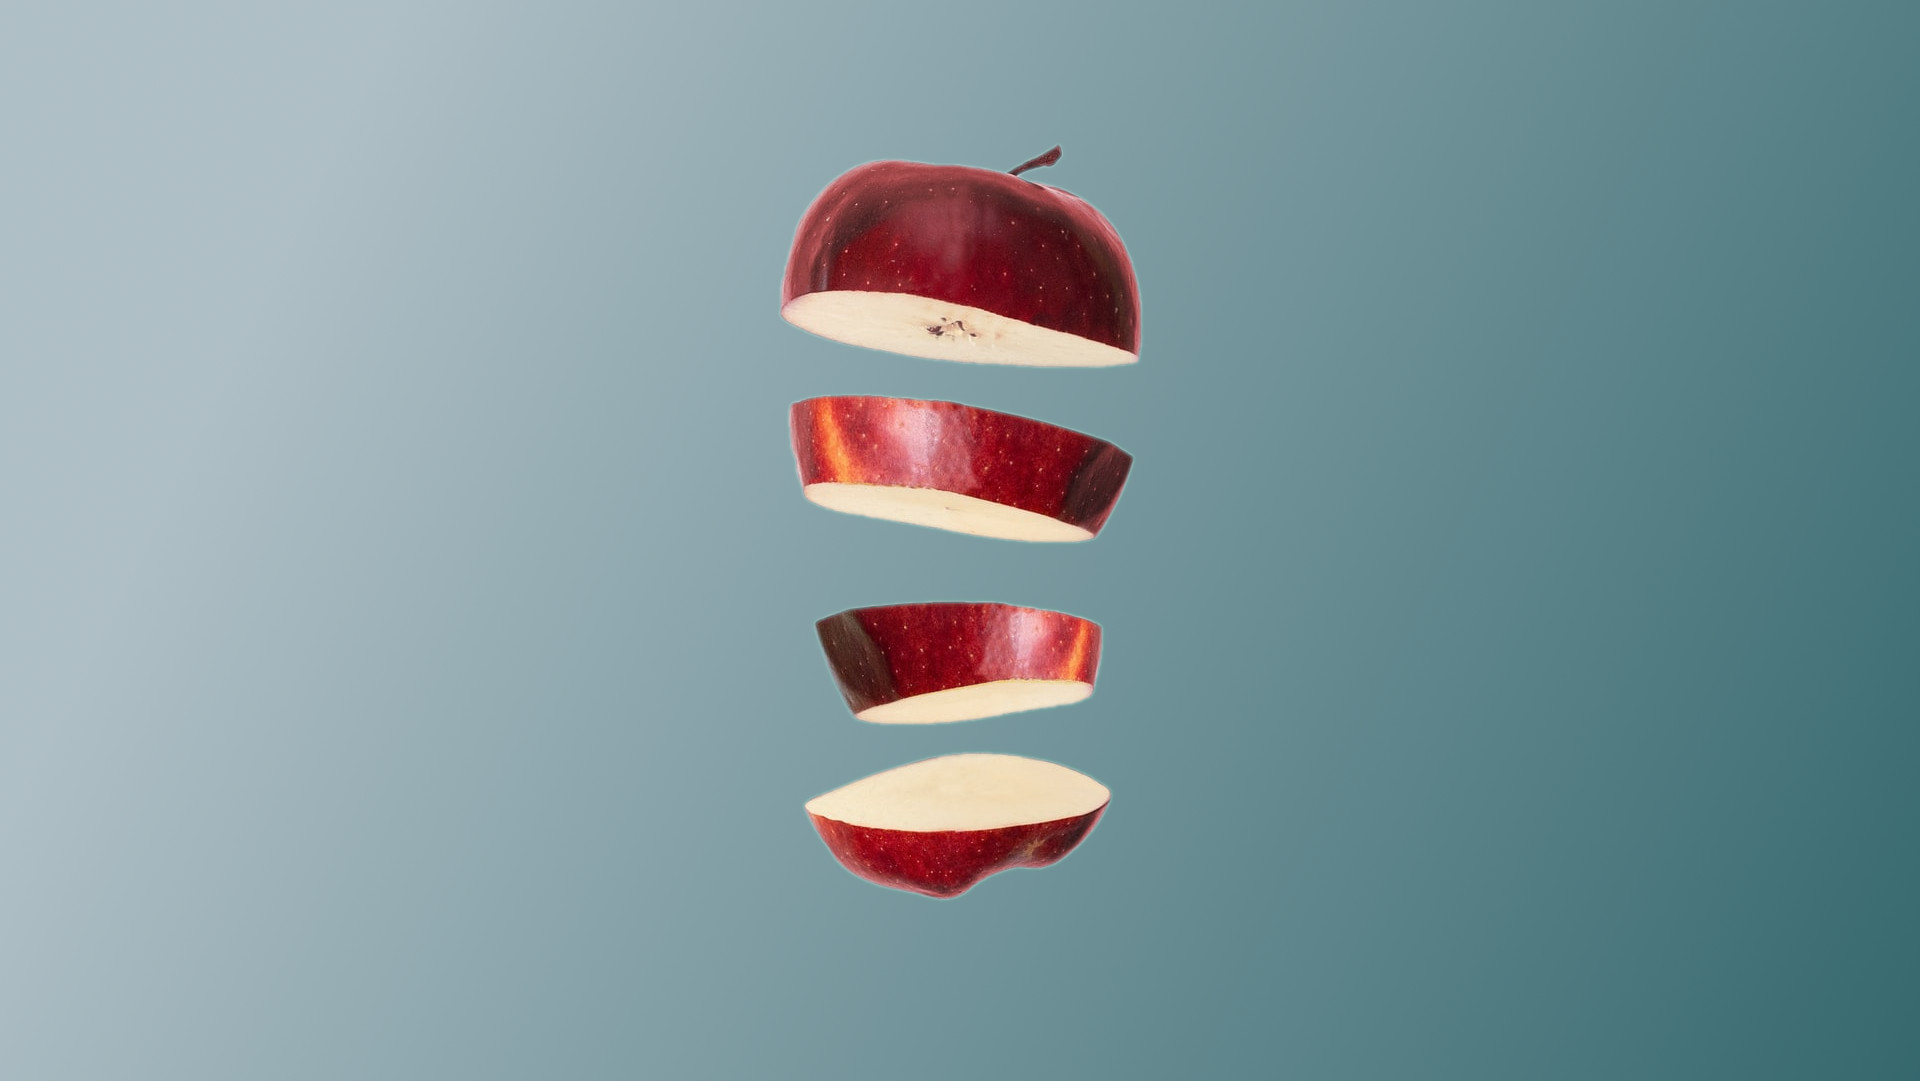 A sliced up apple